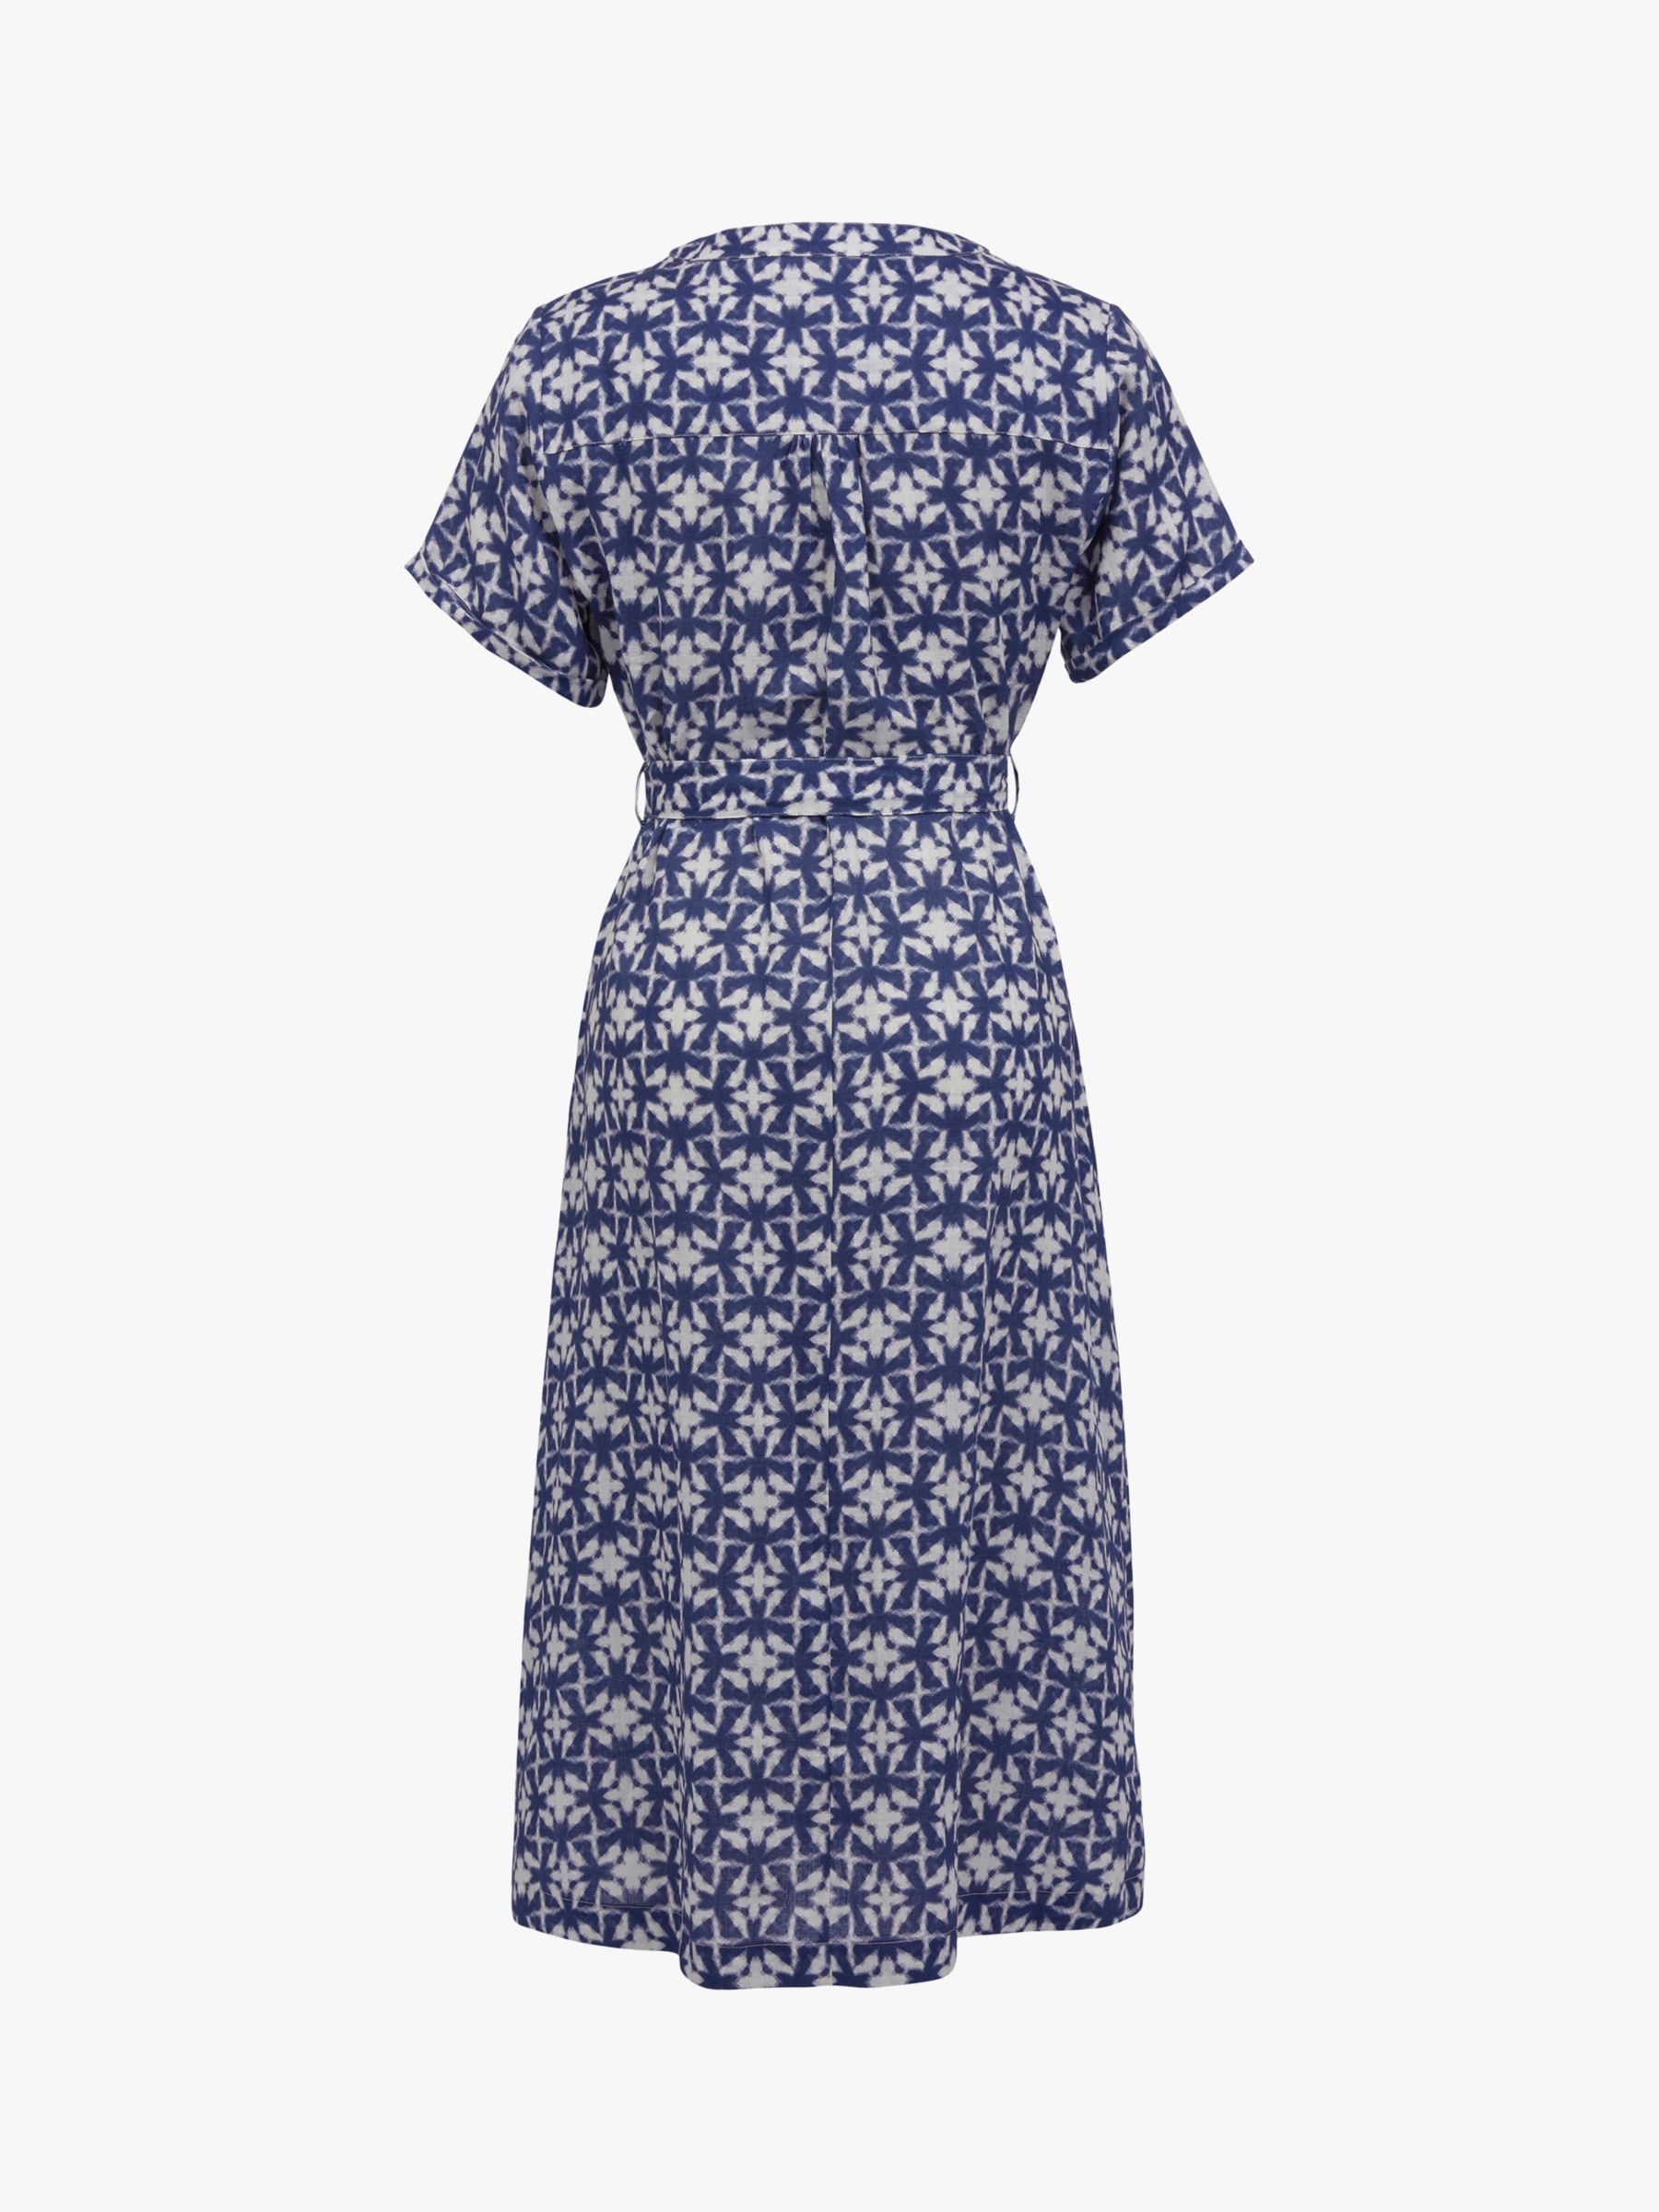 Celtic & Co. Linen Button Through Midi Dress, Blue Block Print, 8